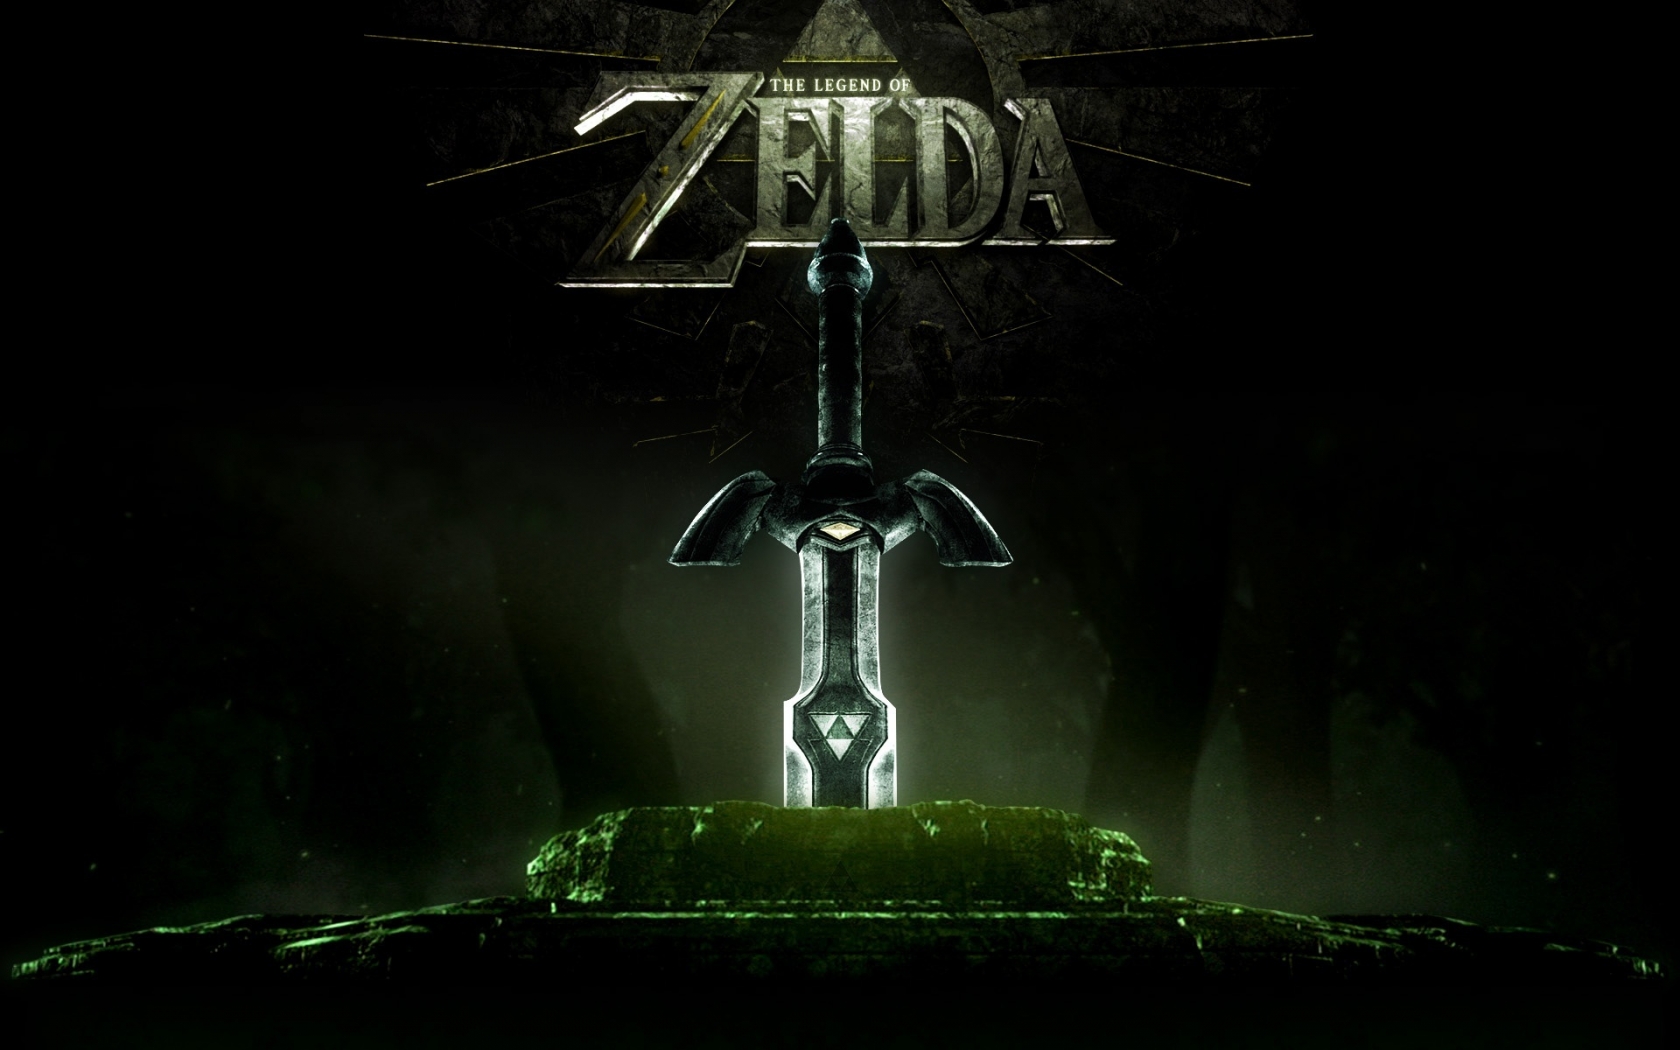 Legend of Zelda for 1680 x 1050 widescreen resolution